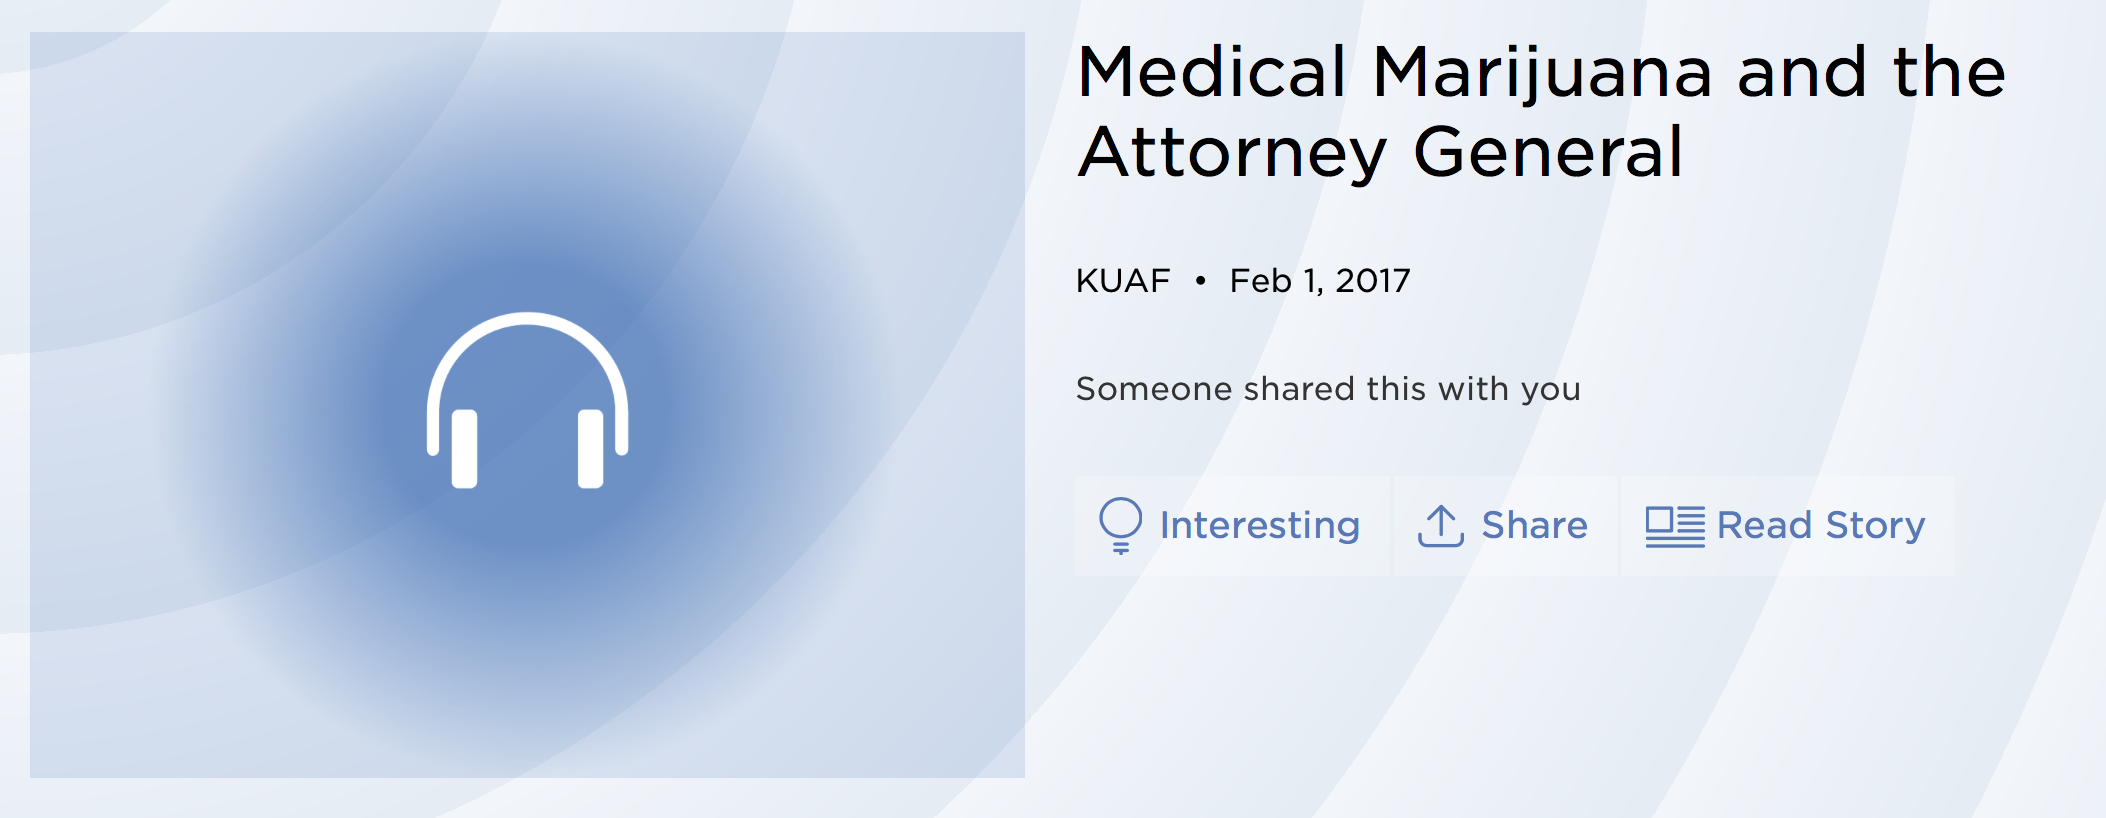 KUAF: Medical Marijuana and the Attorney General